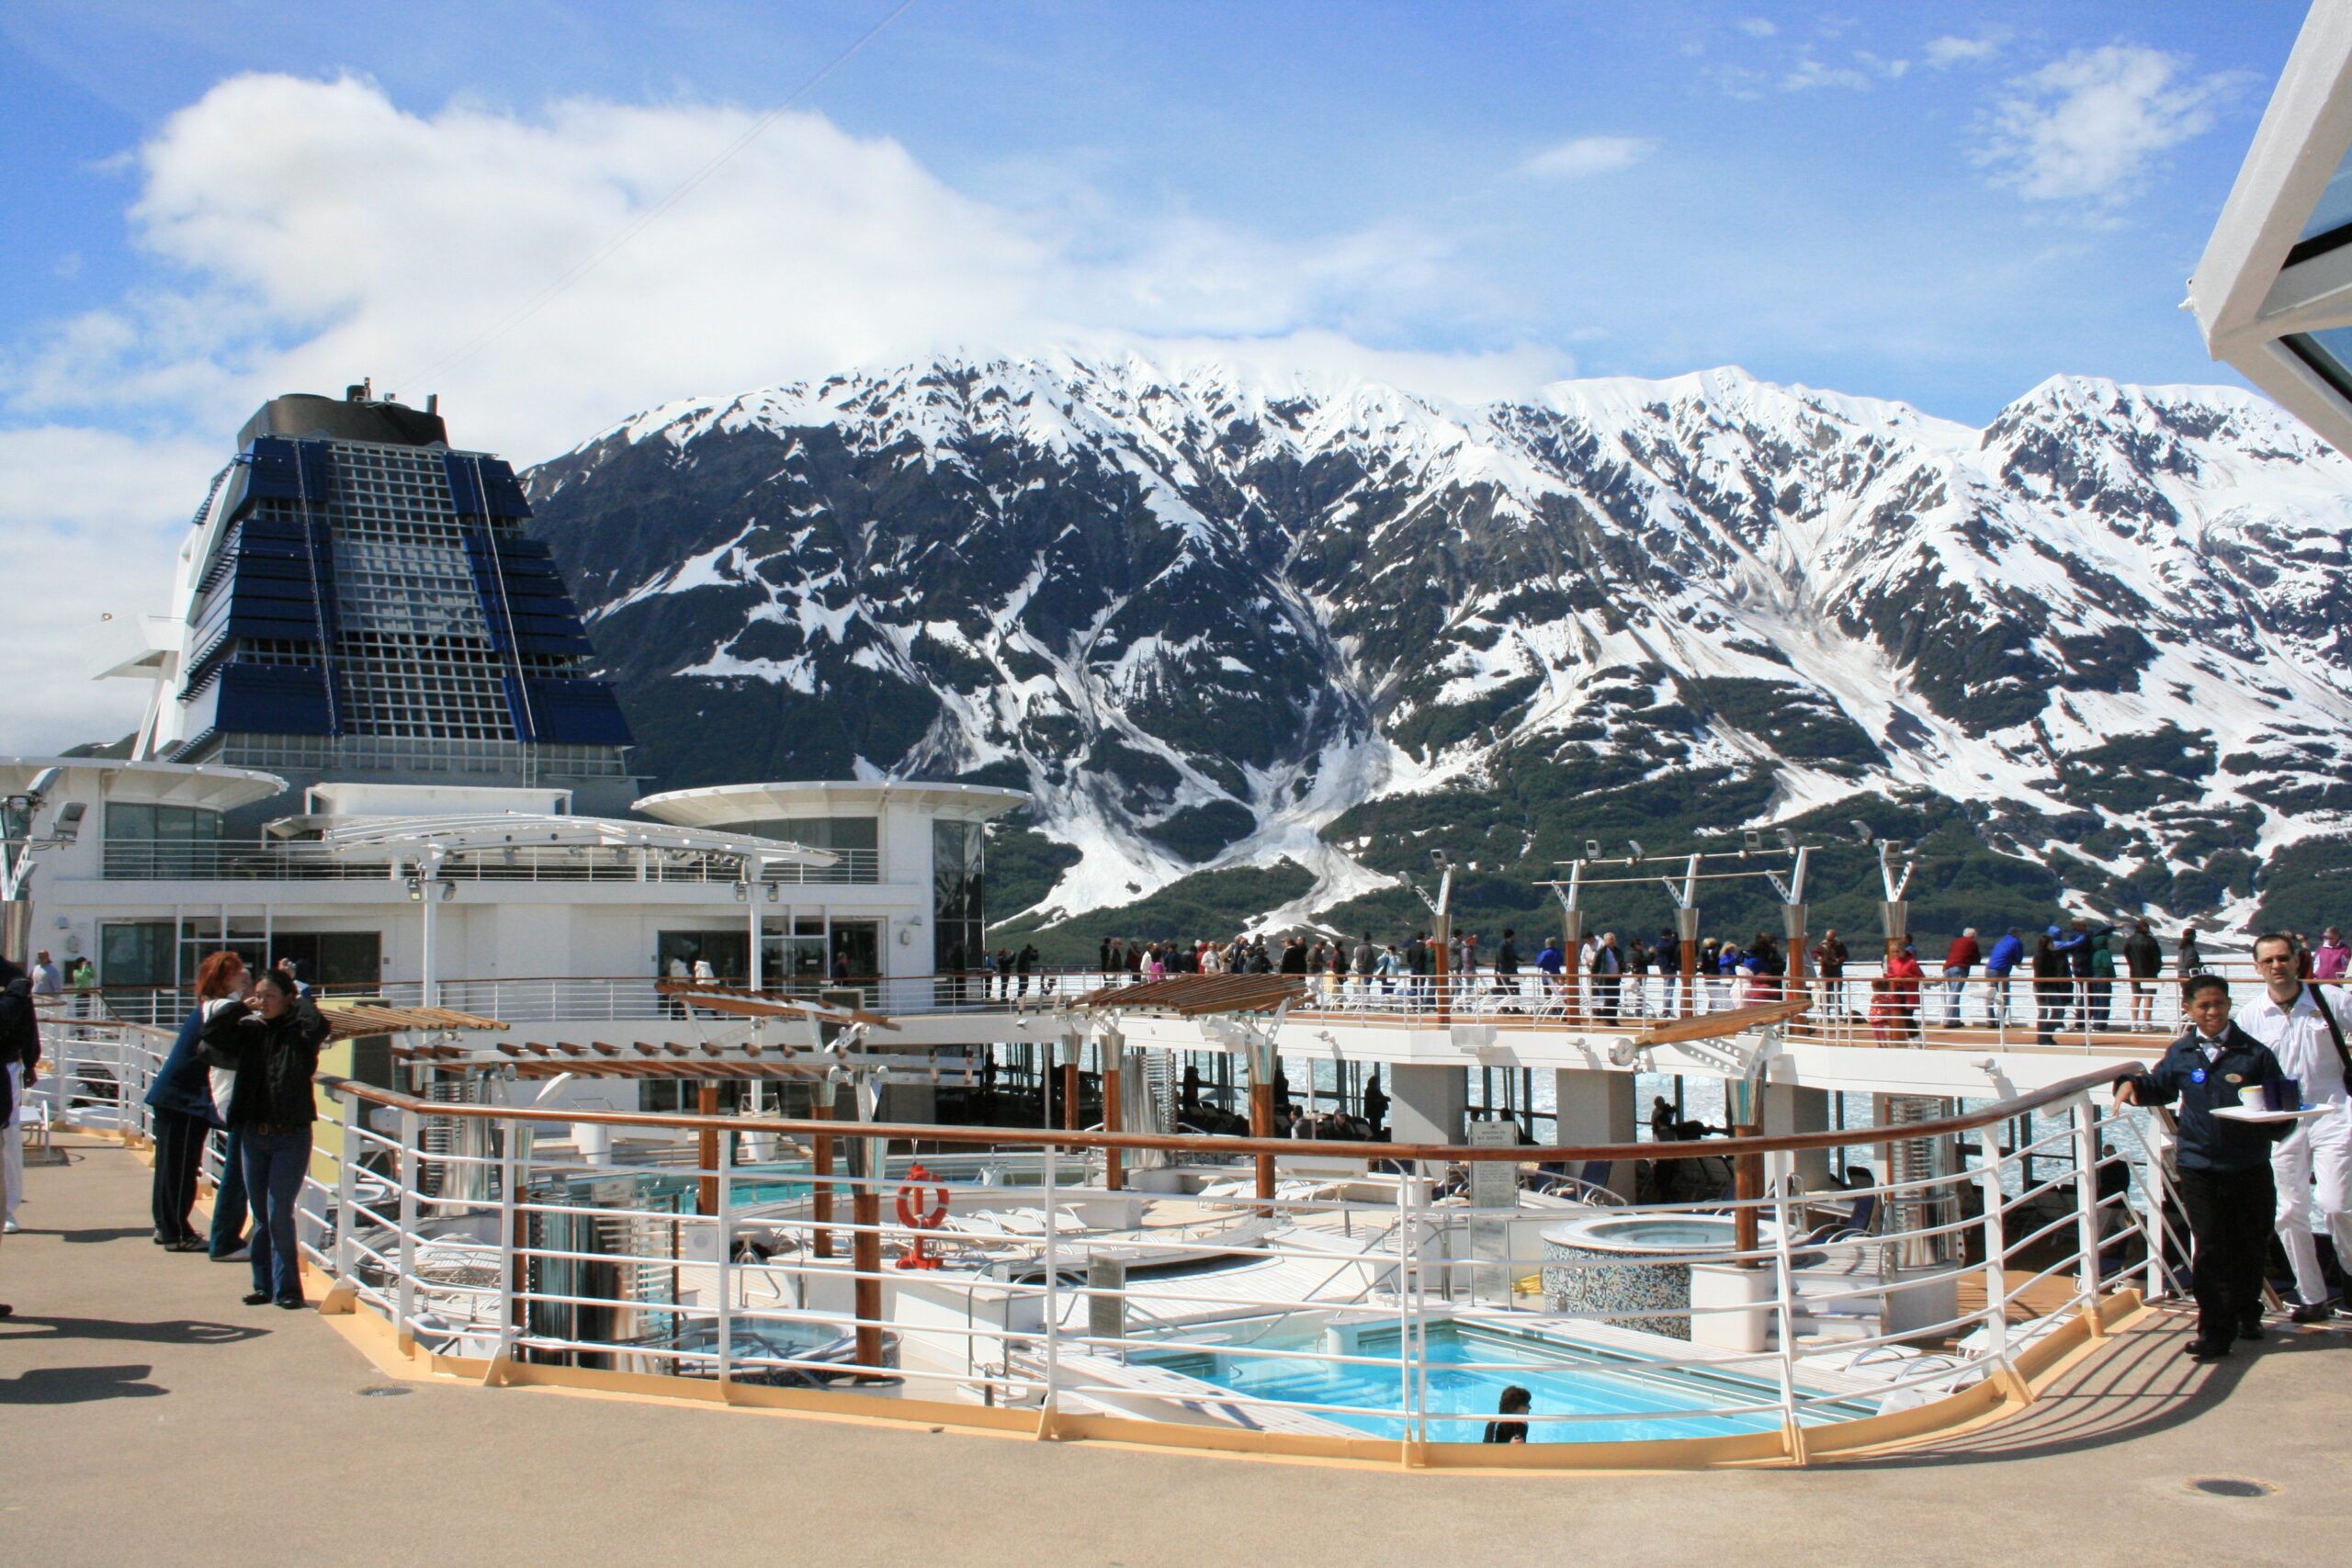 Alaska Northwest Passage Cruise